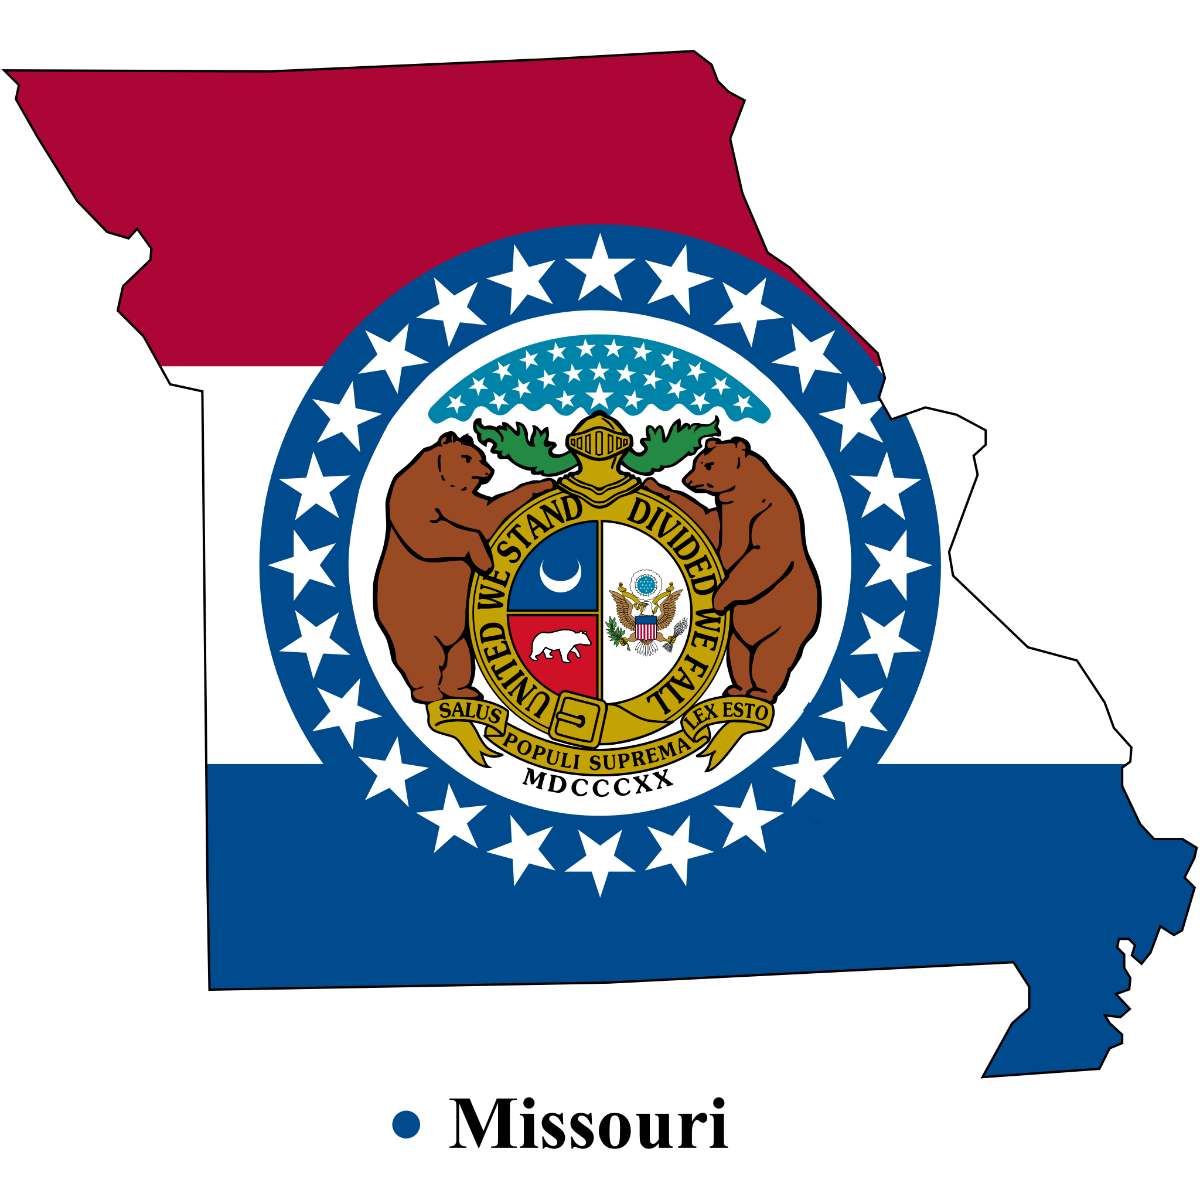 Missouri State map cutout with Missouri flag superimposed